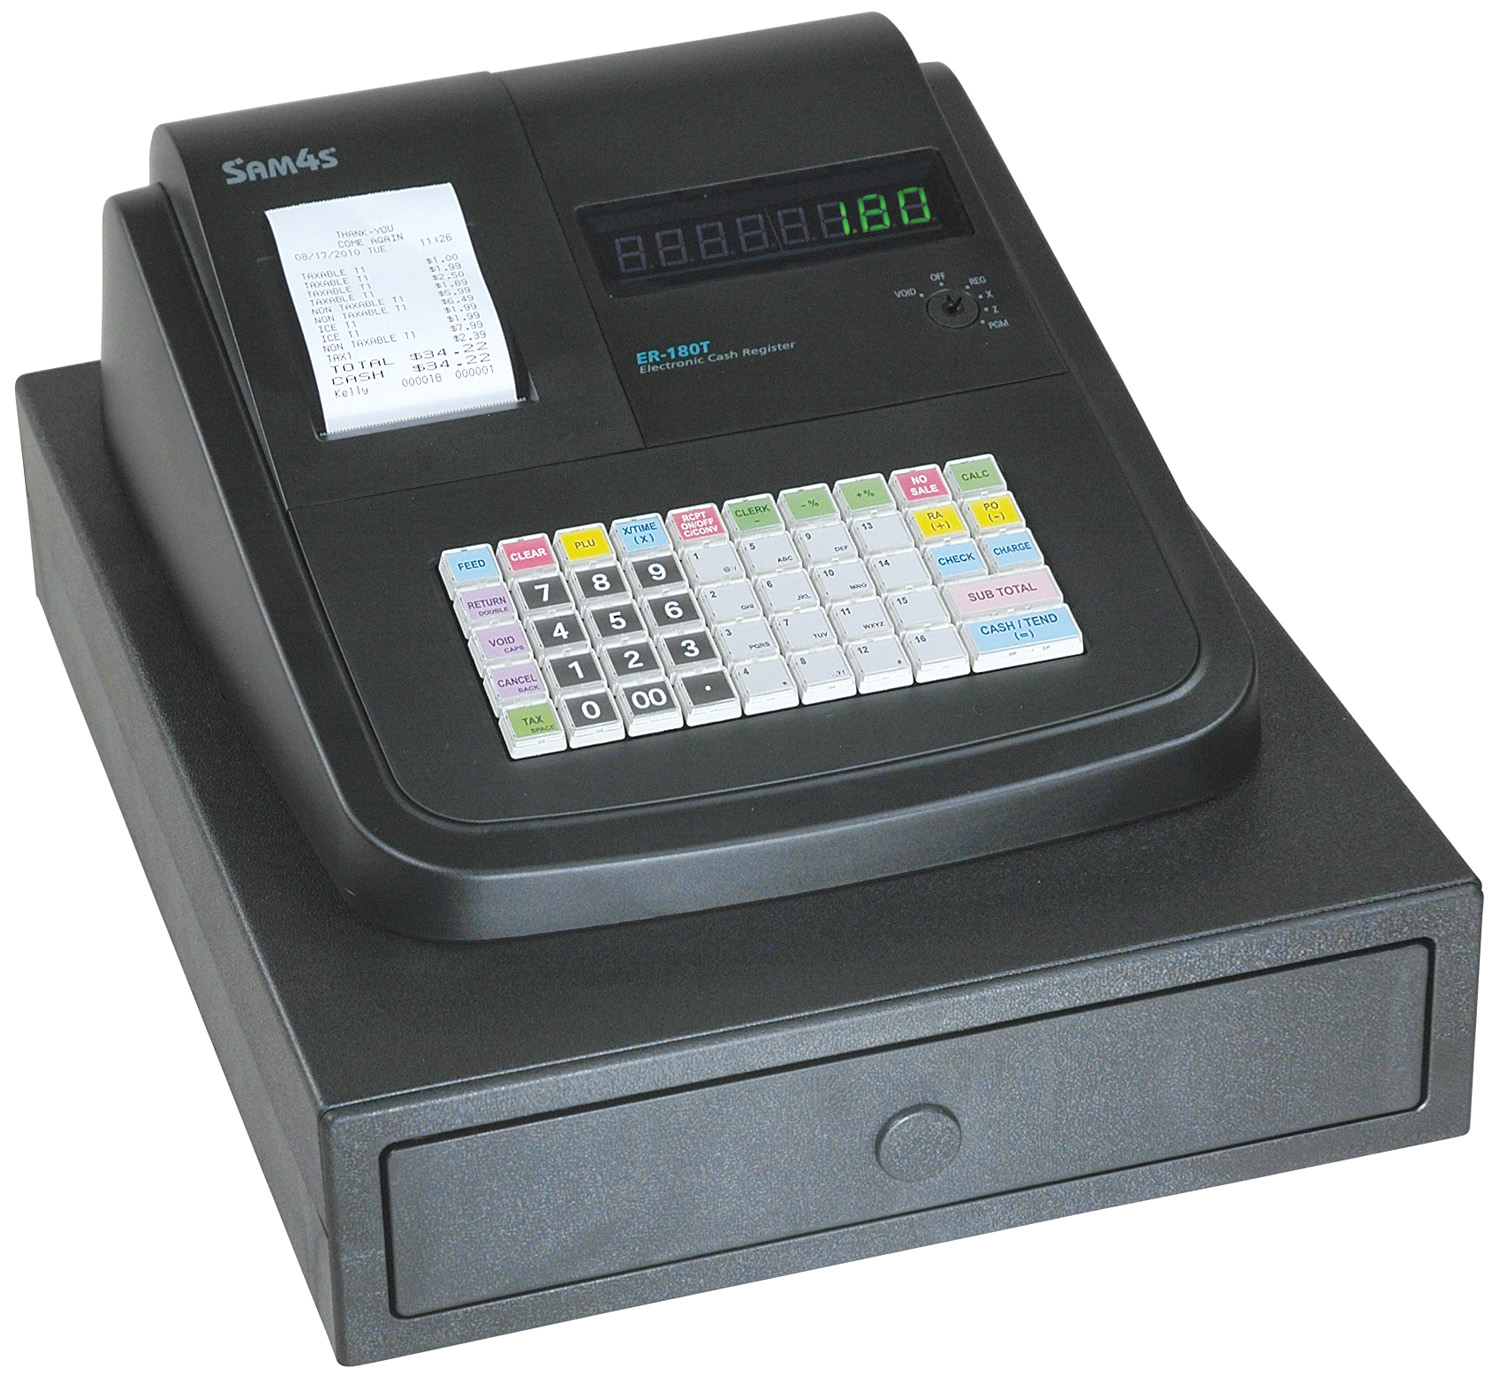 Farex from 04 cash register user manual